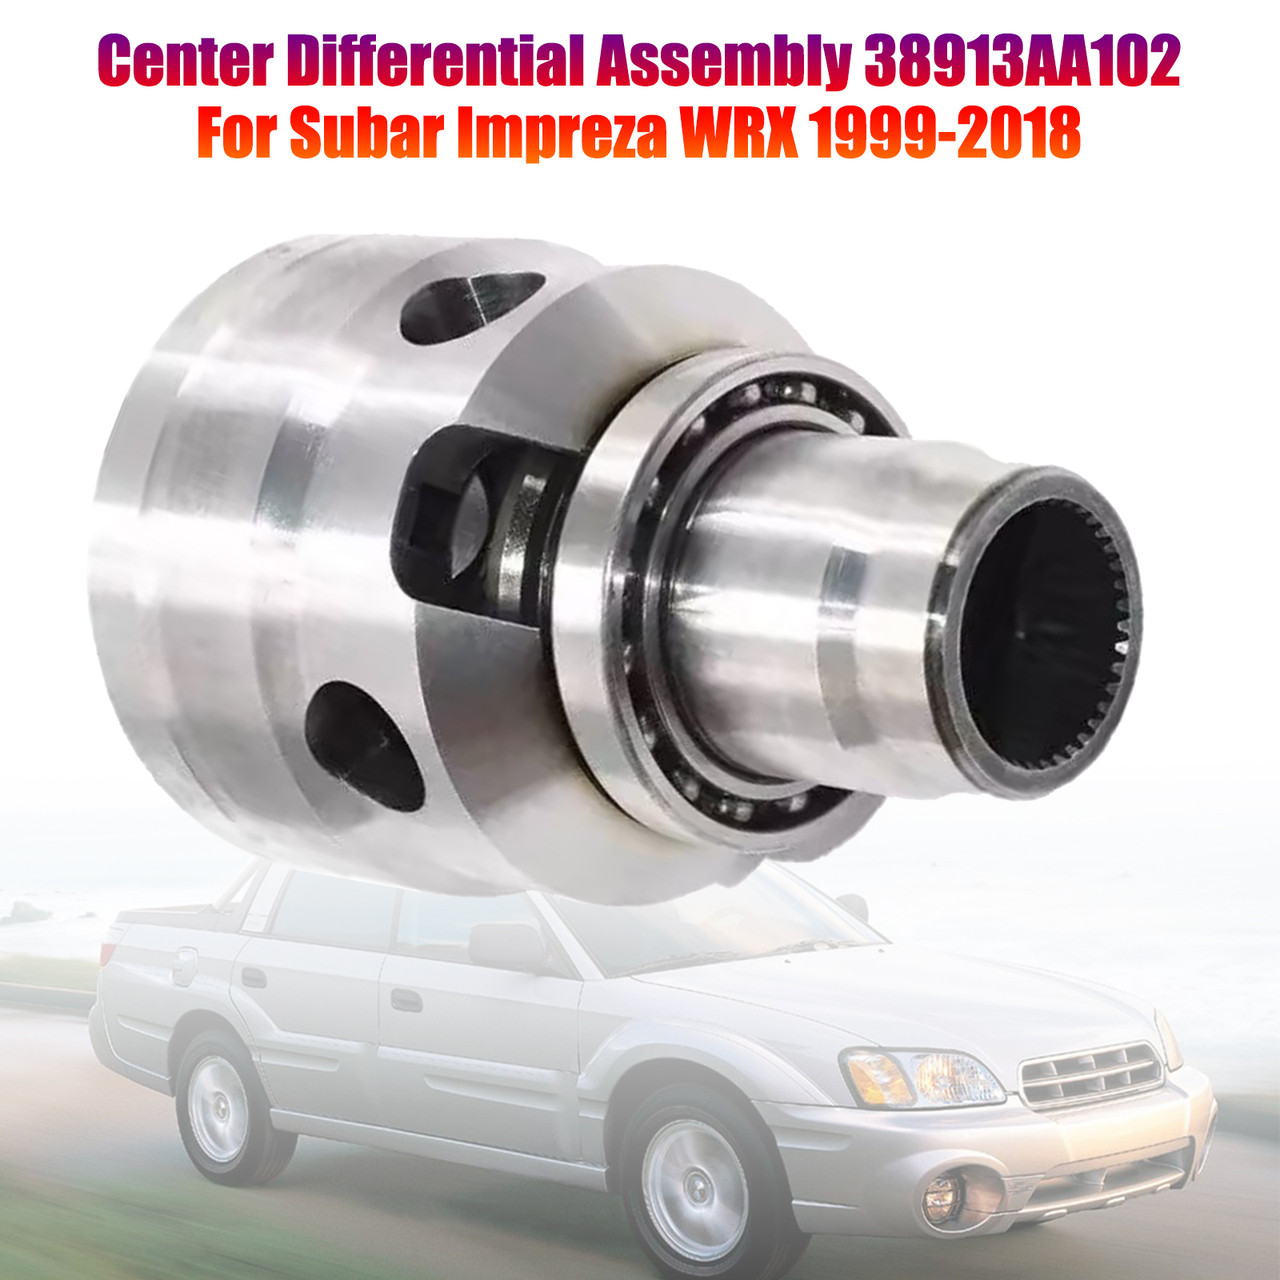 1999-2018 Subaru ImprezaCenter Differential Assembly 38913AA102